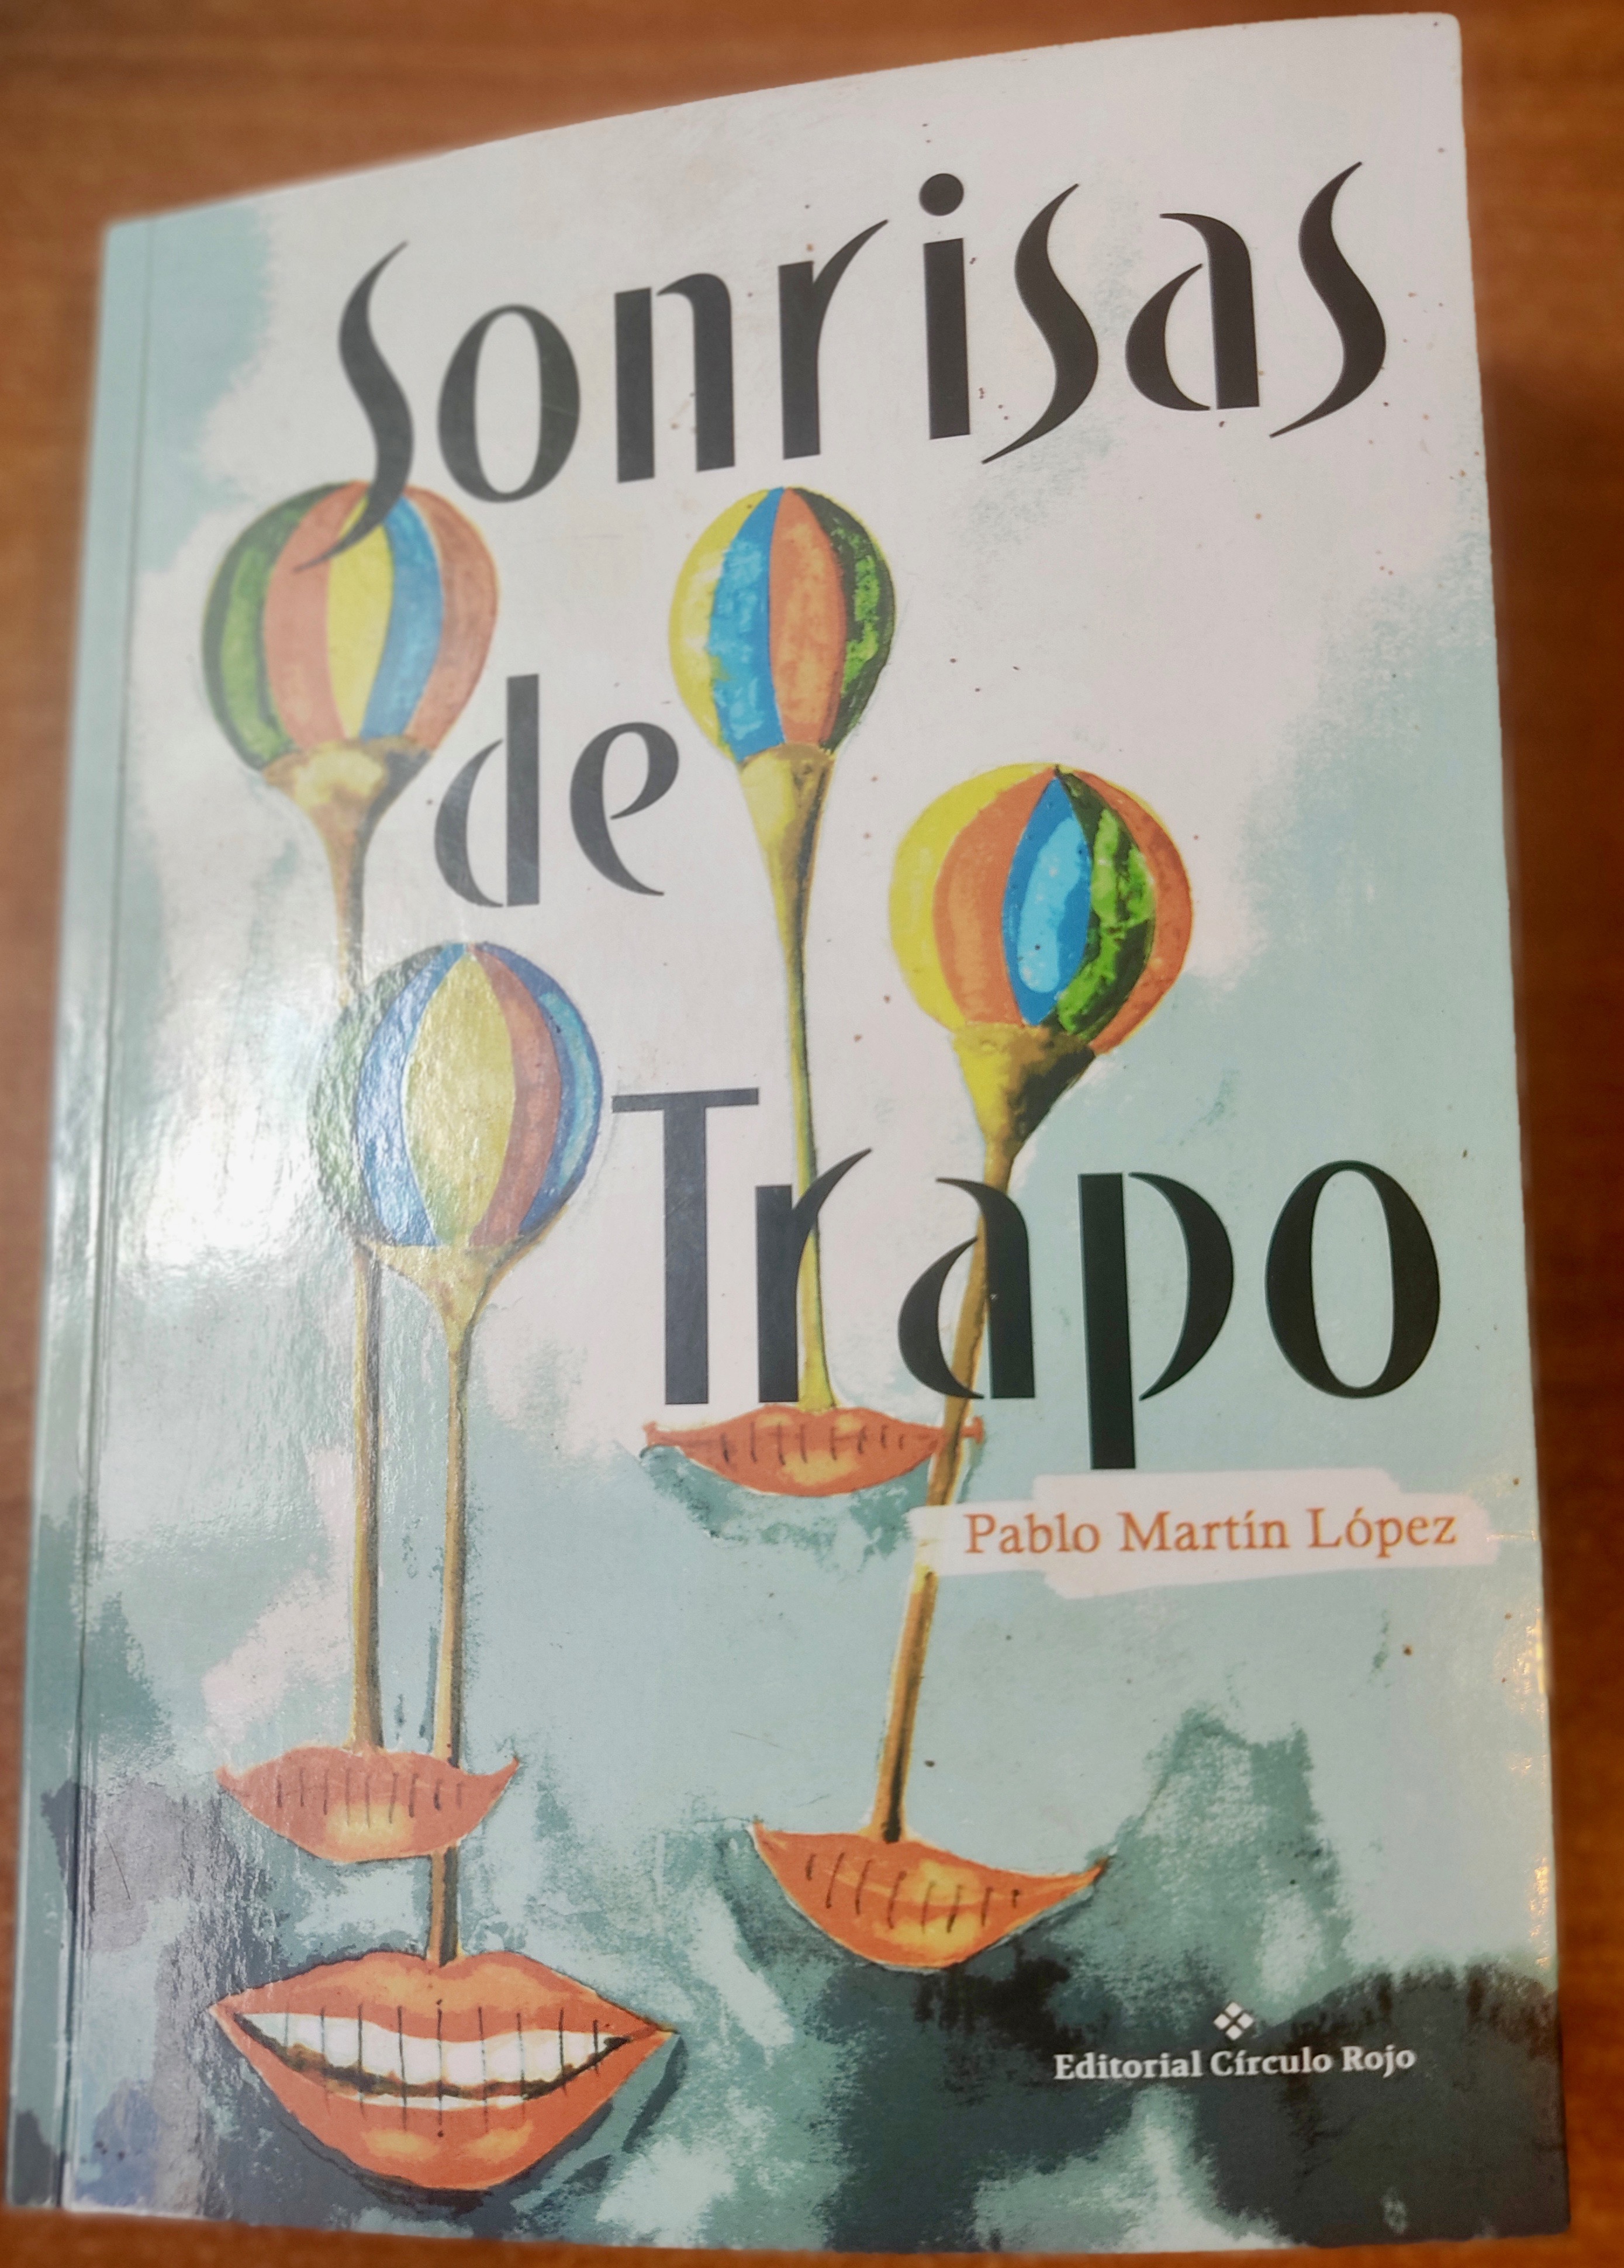 Sonrisas de trapo_Pablo Martín López